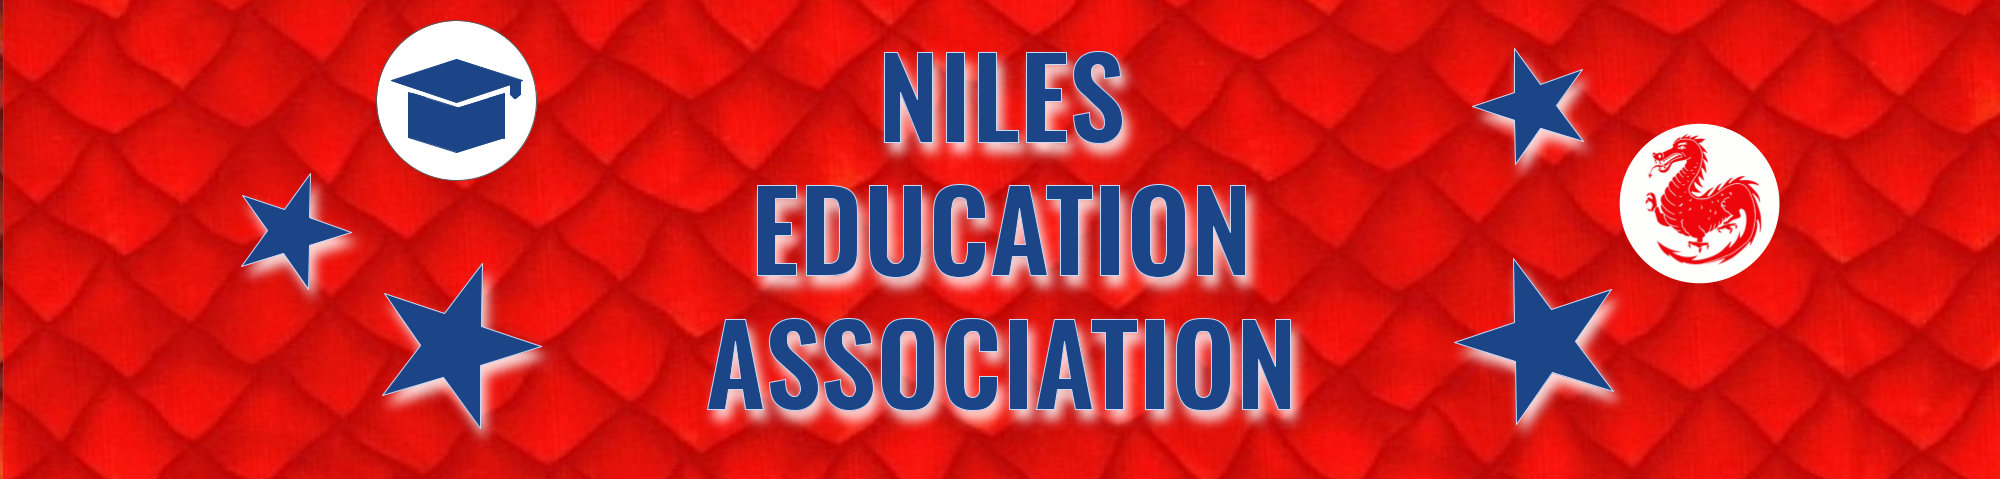 Niles Education Association